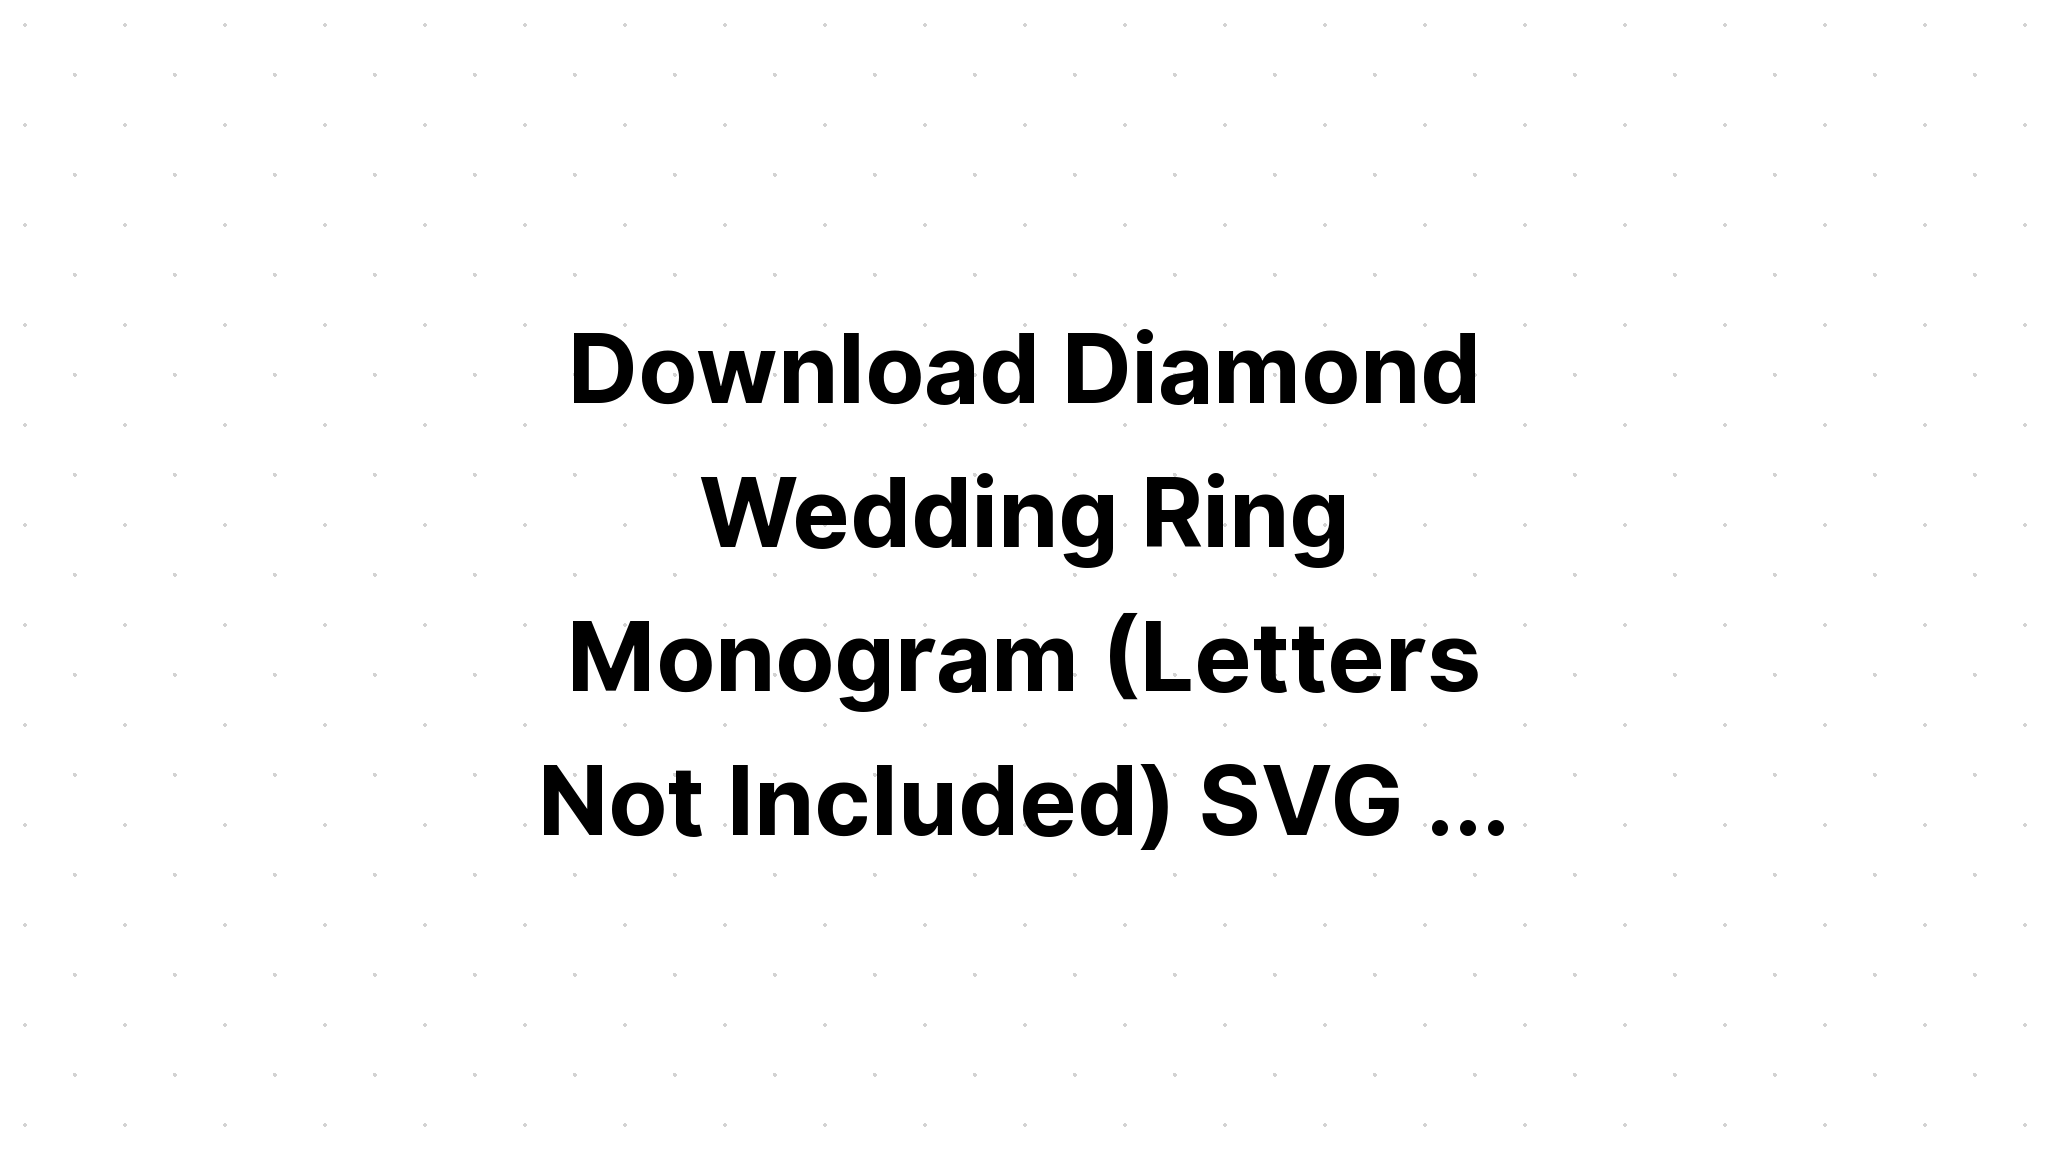 Download Free Svg Diamond Ring Cut File - Free SVG Cut File